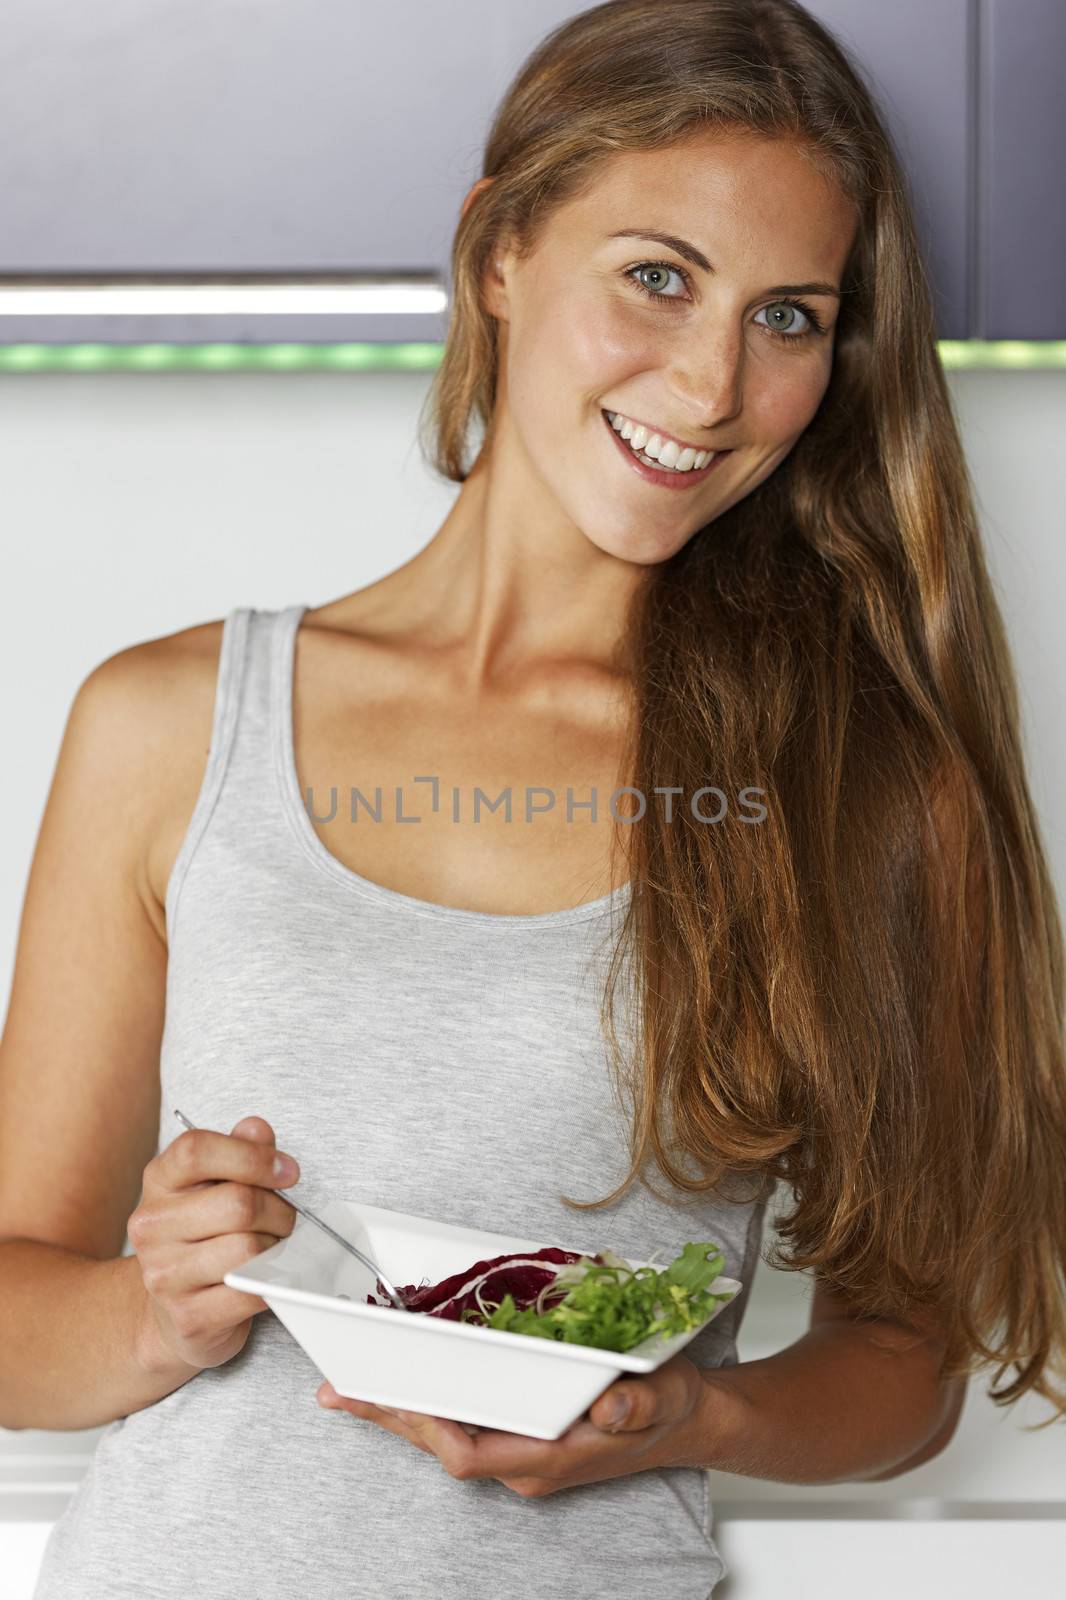 Young woman enjoying a fresh salad.